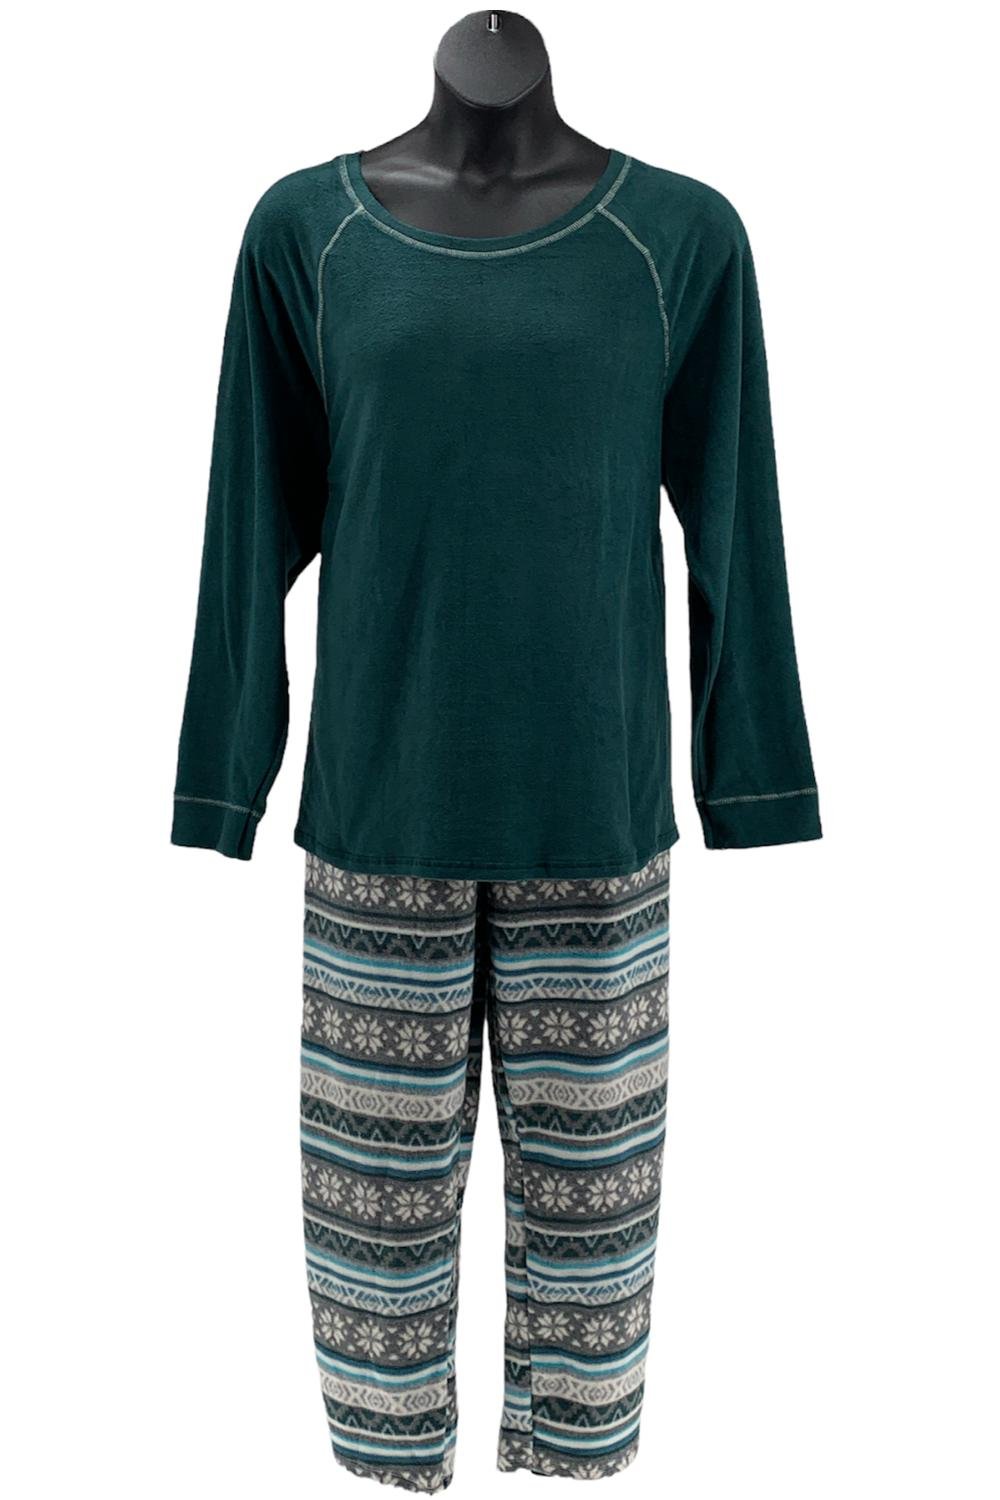 Cuddl Duds Fleecewear with Stretch Pajama Set- PINE GREEN/ FAIR ISLE, SZ  LARGE - Simpson Advanced Chiropractic & Medical Center